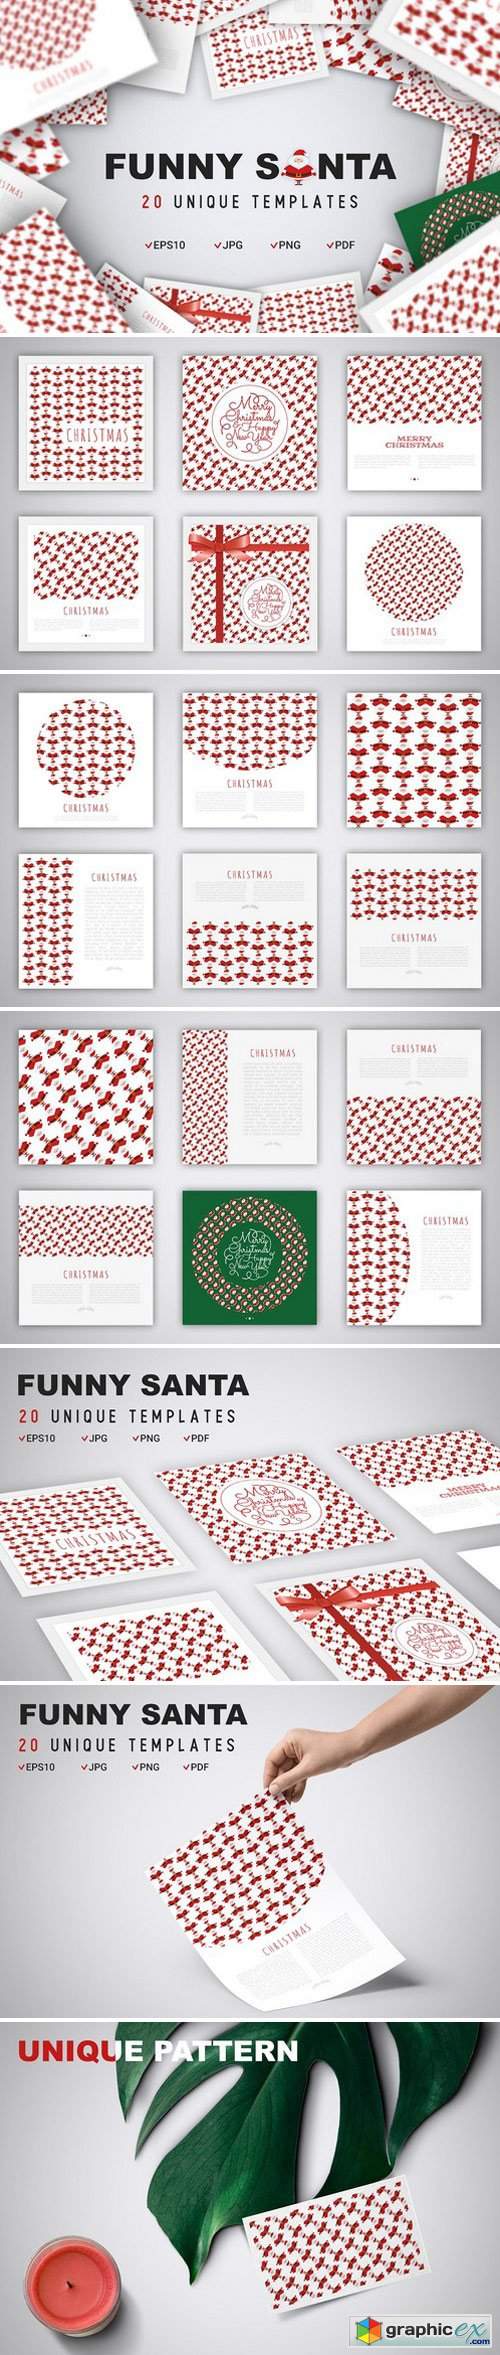 Funny Santa Concept